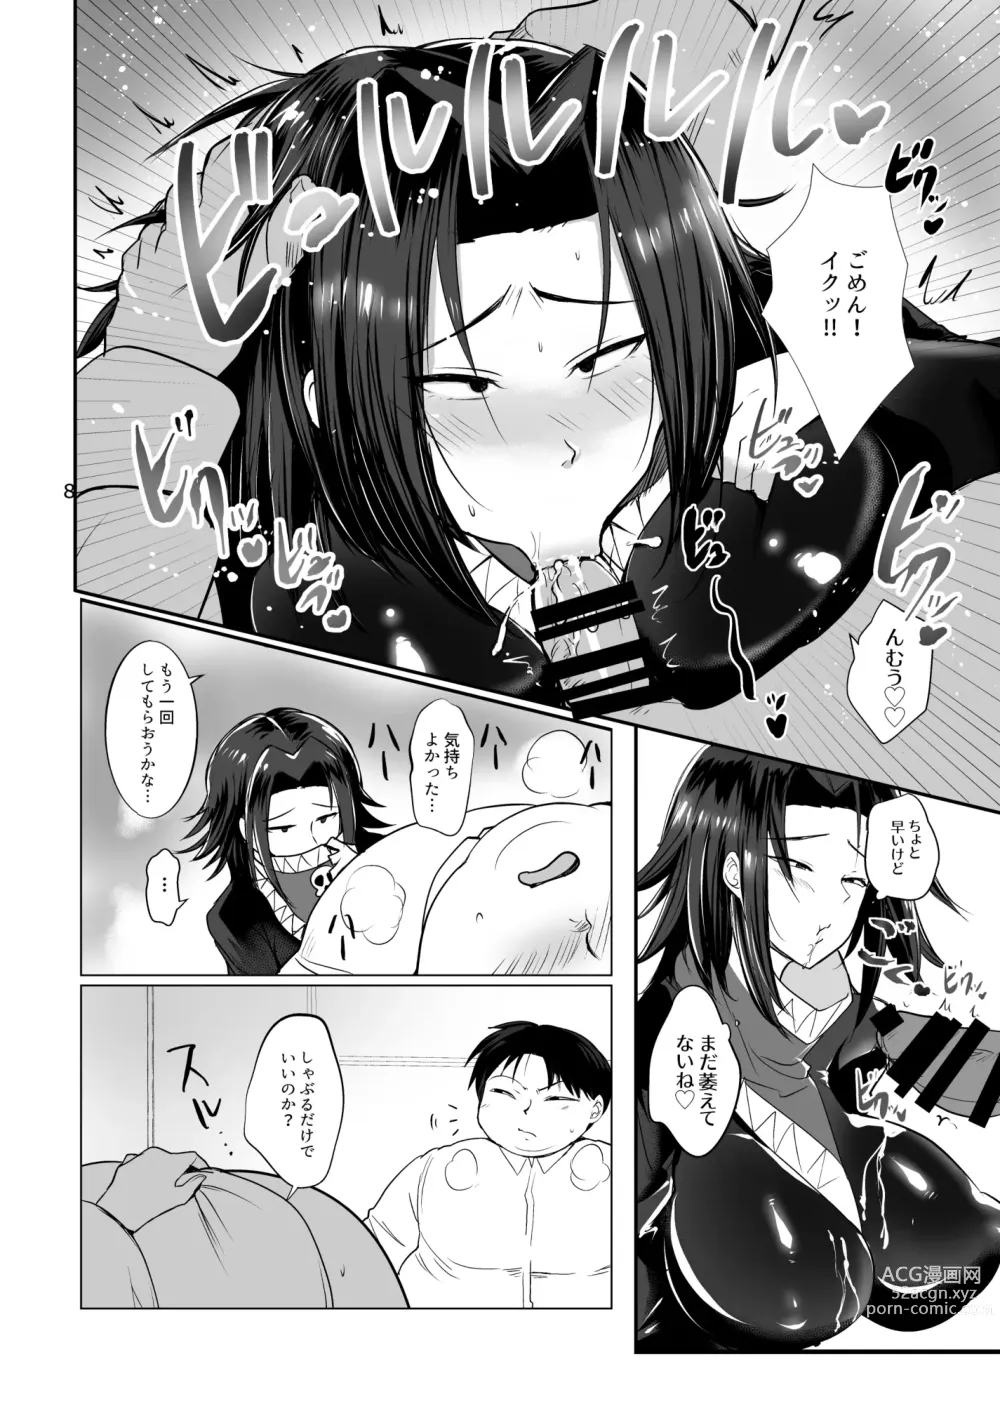 Page 6 of doujinshi Milluki ga GI o Kaenakatta Riyuu.